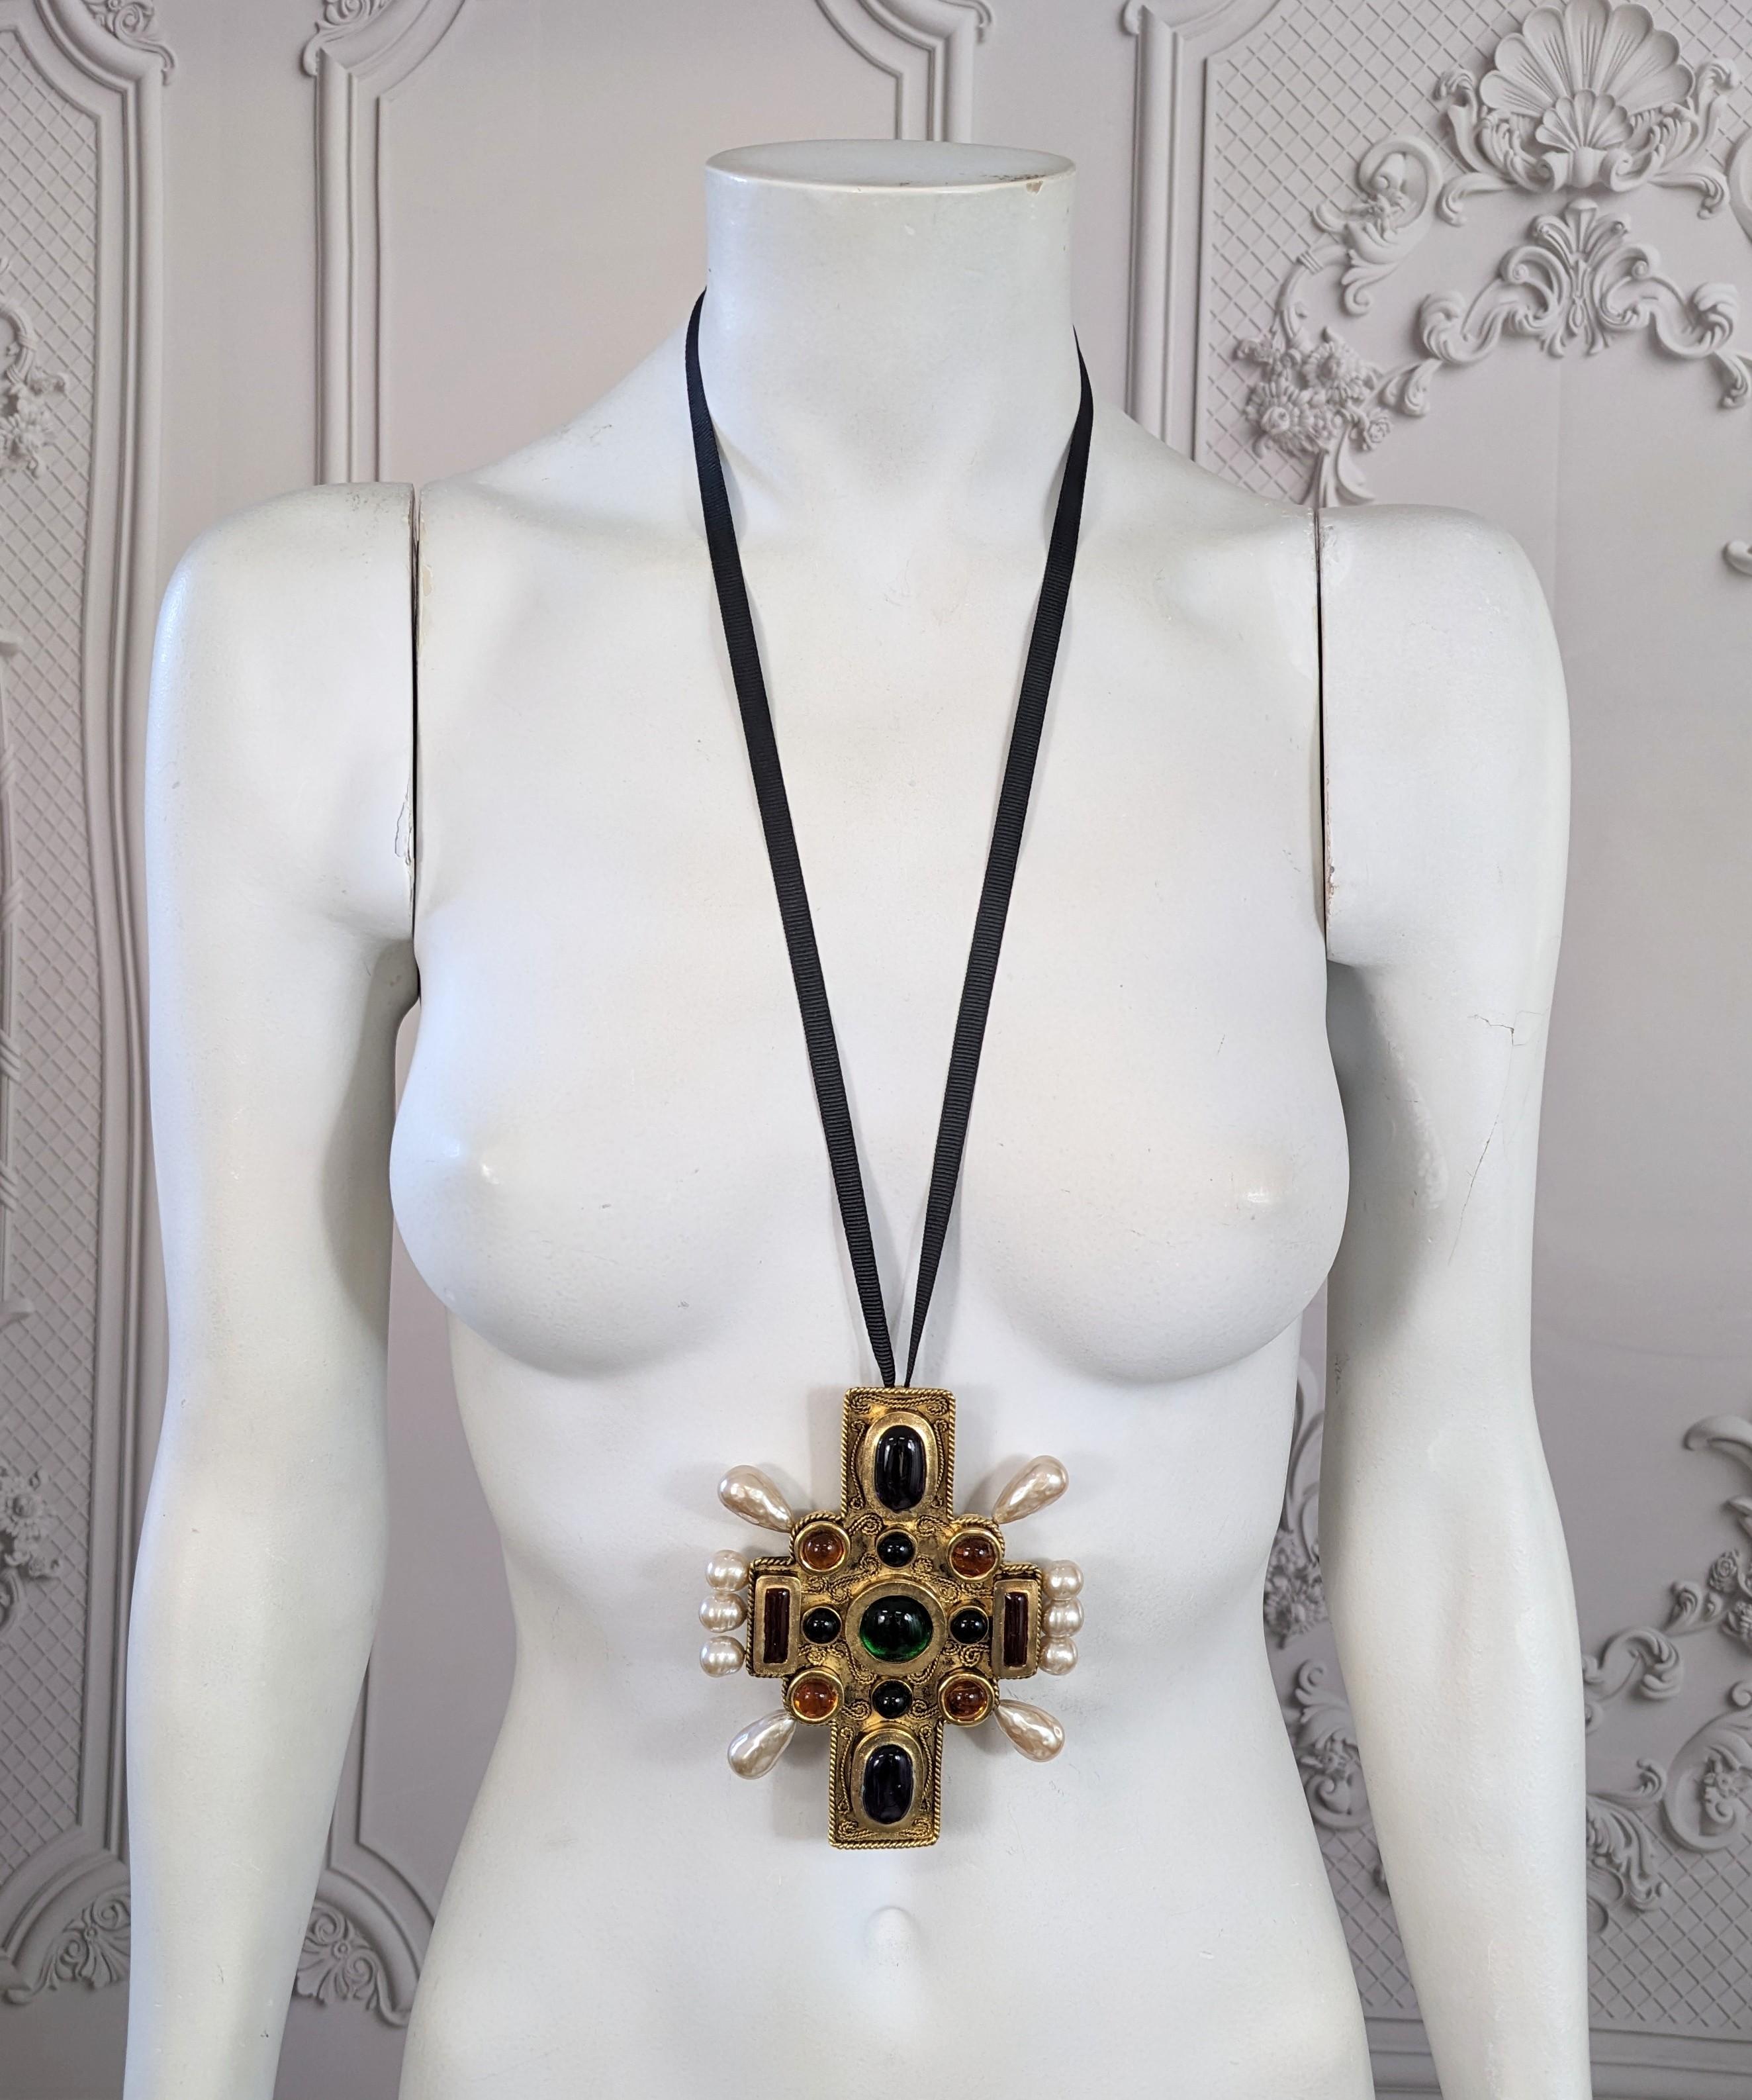 Chanel Massive Byzantine Cross Pendant Brooch by Maison Gripoix For Sale 3